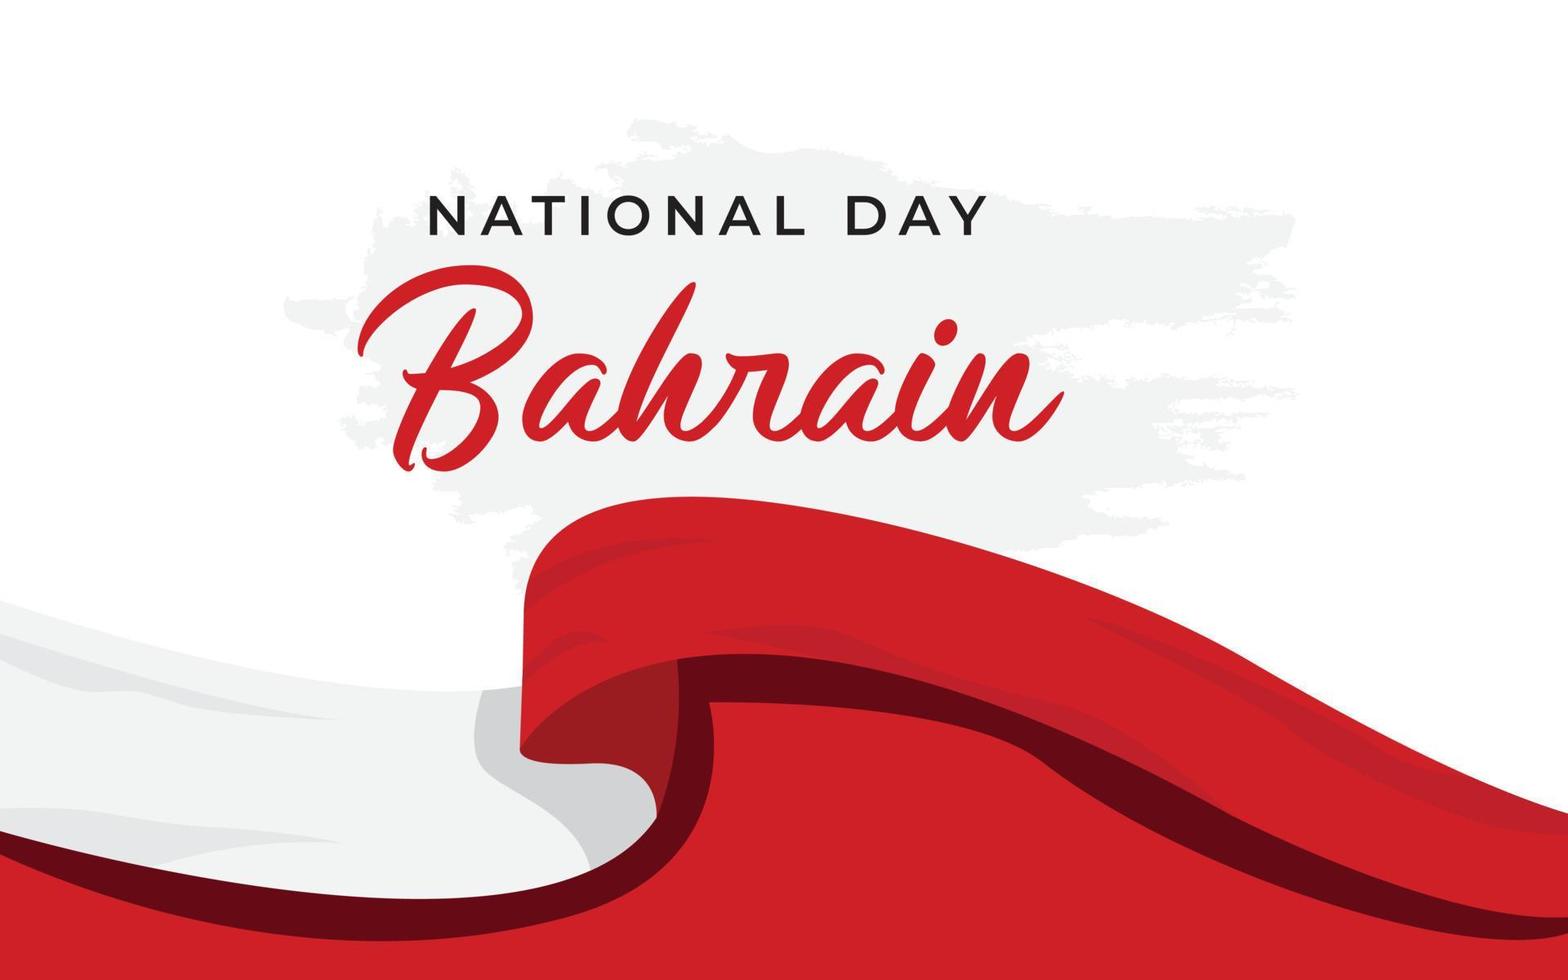 Bahrain national day design template vector